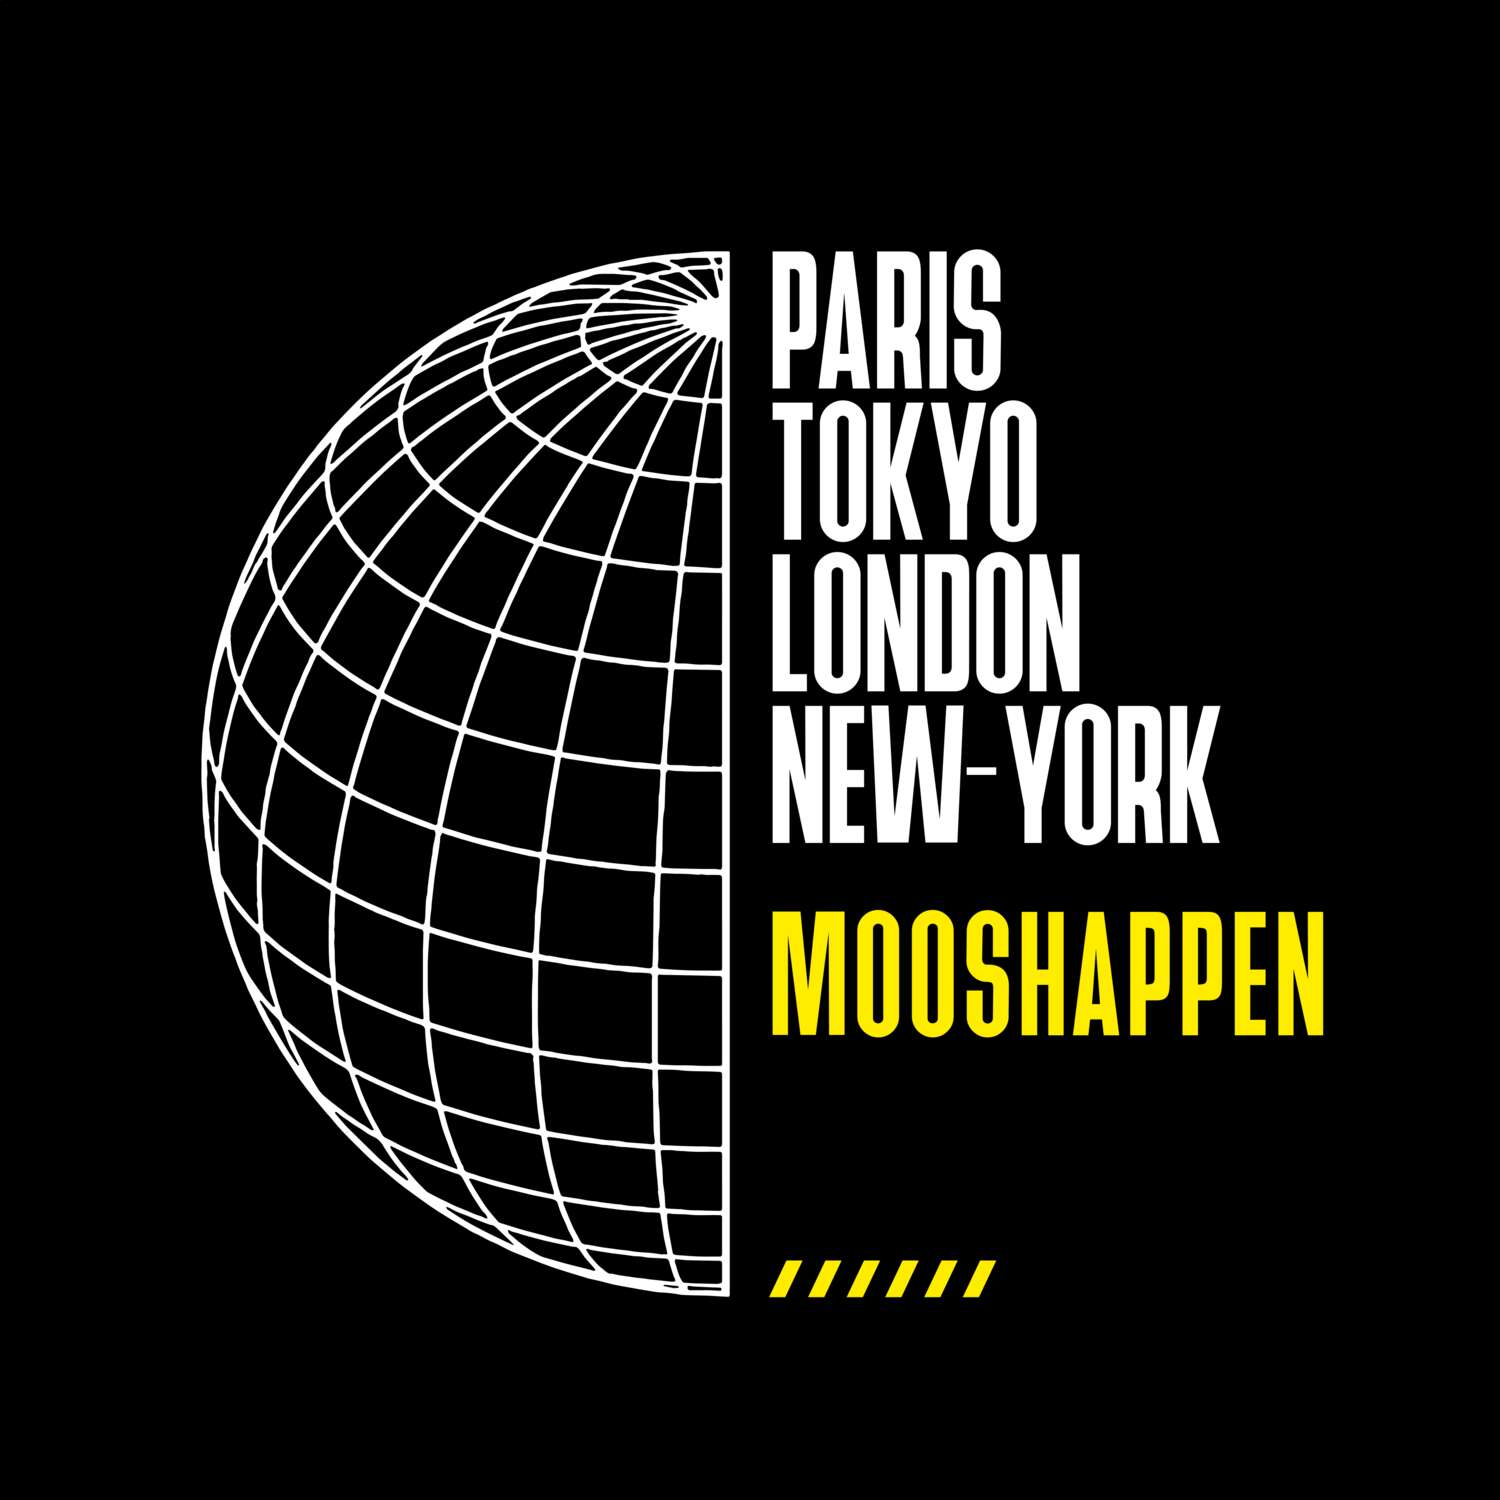 Mooshappen T-Shirt »Paris Tokyo London«